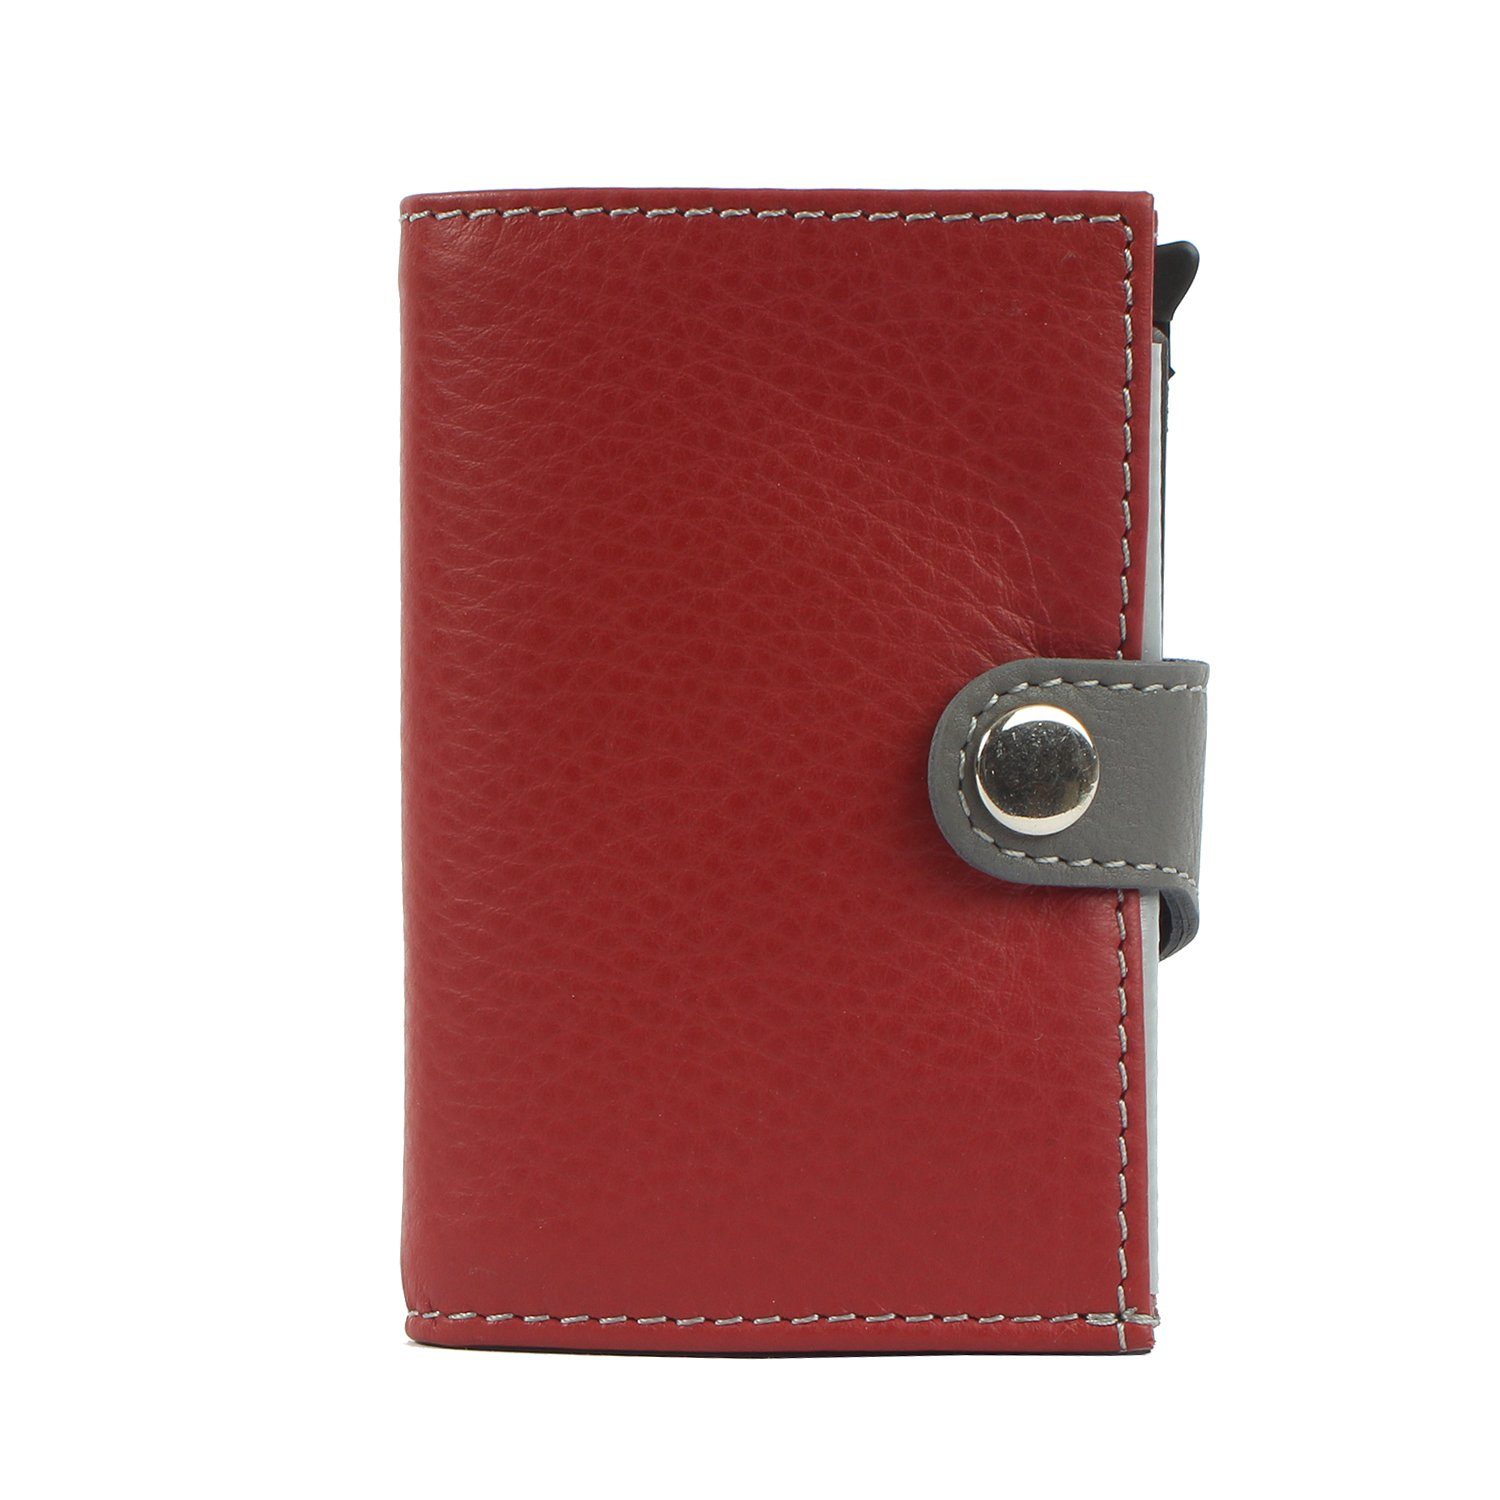 Margelisch Mini Kreditkartenbörse leather, aus Leder Upcycling single Geldbörse noonyu